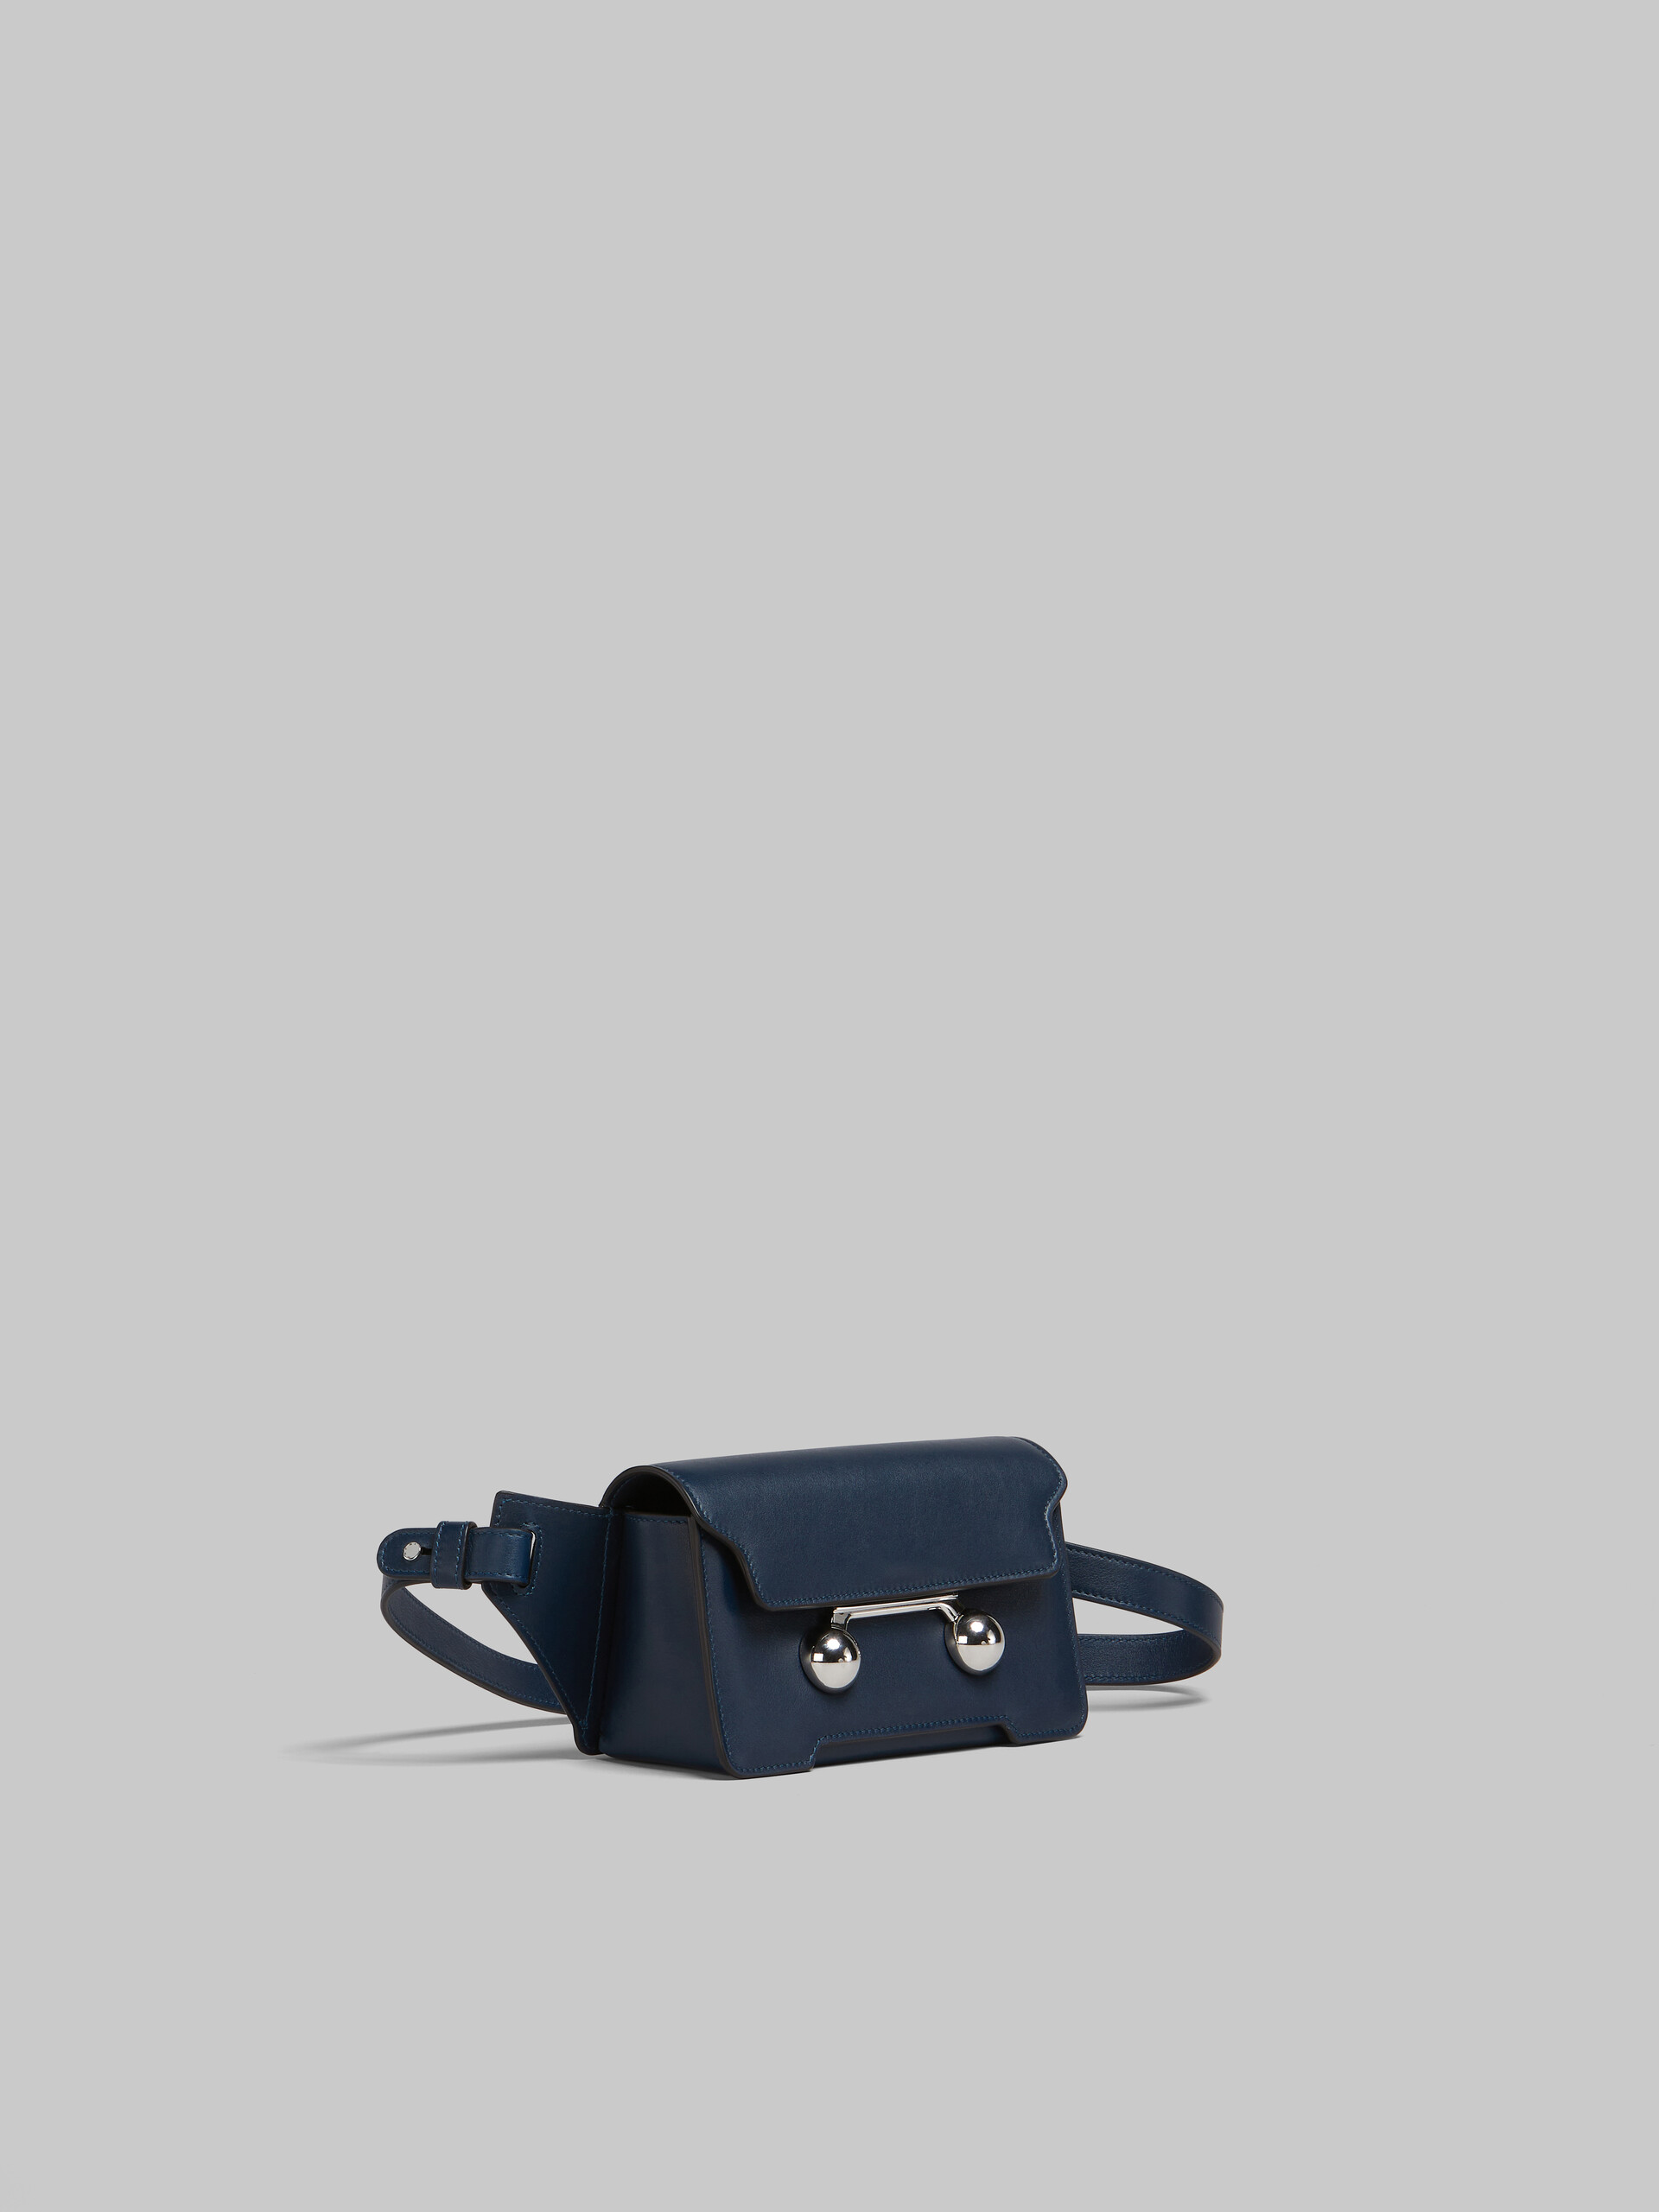 Deep blue leather Trunkaroo crossbody bag - Belt Bag - Image 6